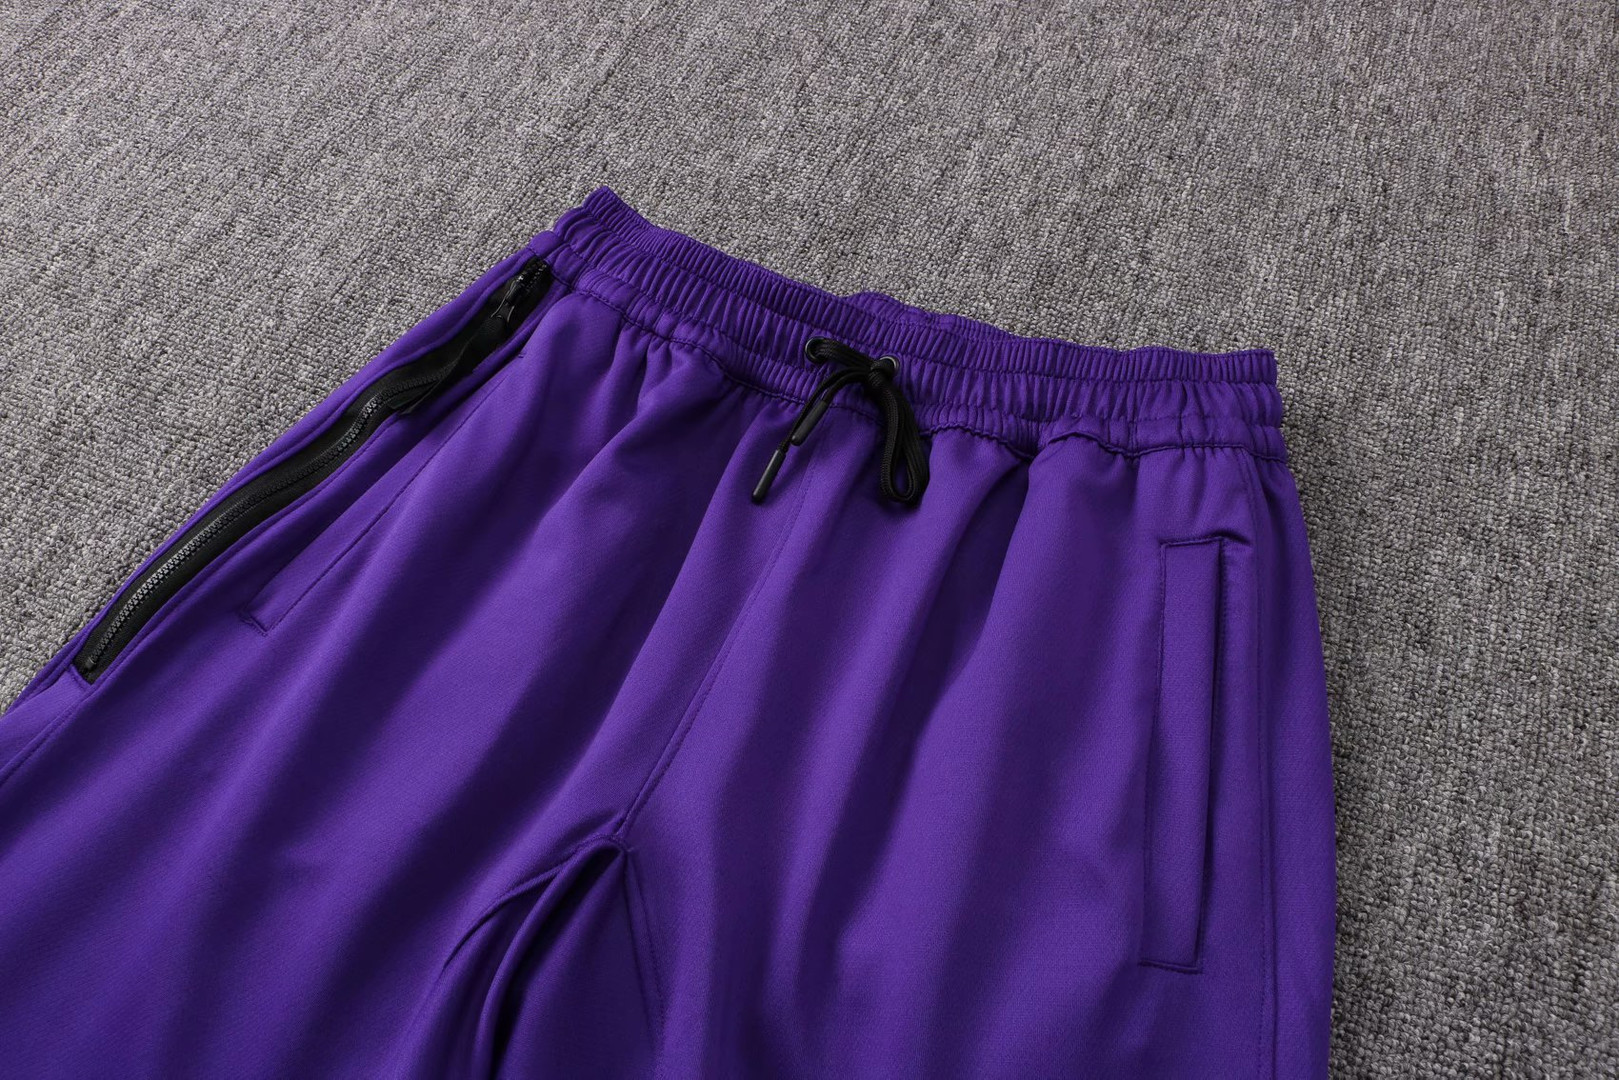 21/22 LA Lakers Hoodie Purple Soccer Training Suit Jacket + Pants Mens